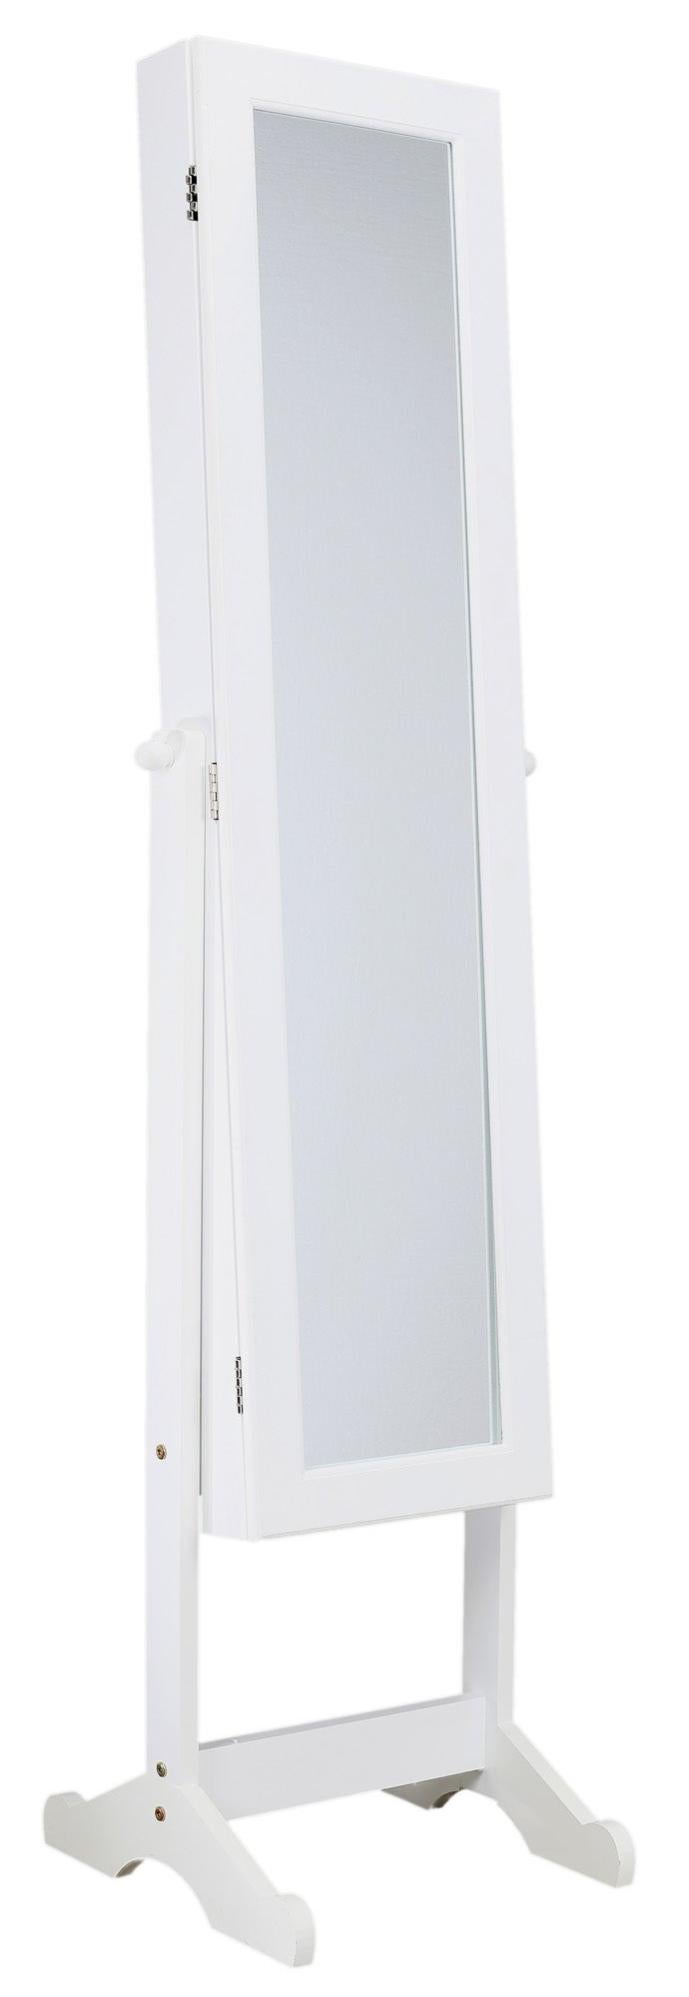 Potencial Persona Centímetro Espejo enmarcado rectangular Joyero blanco 146 x 40 cm | Leroy Merlin